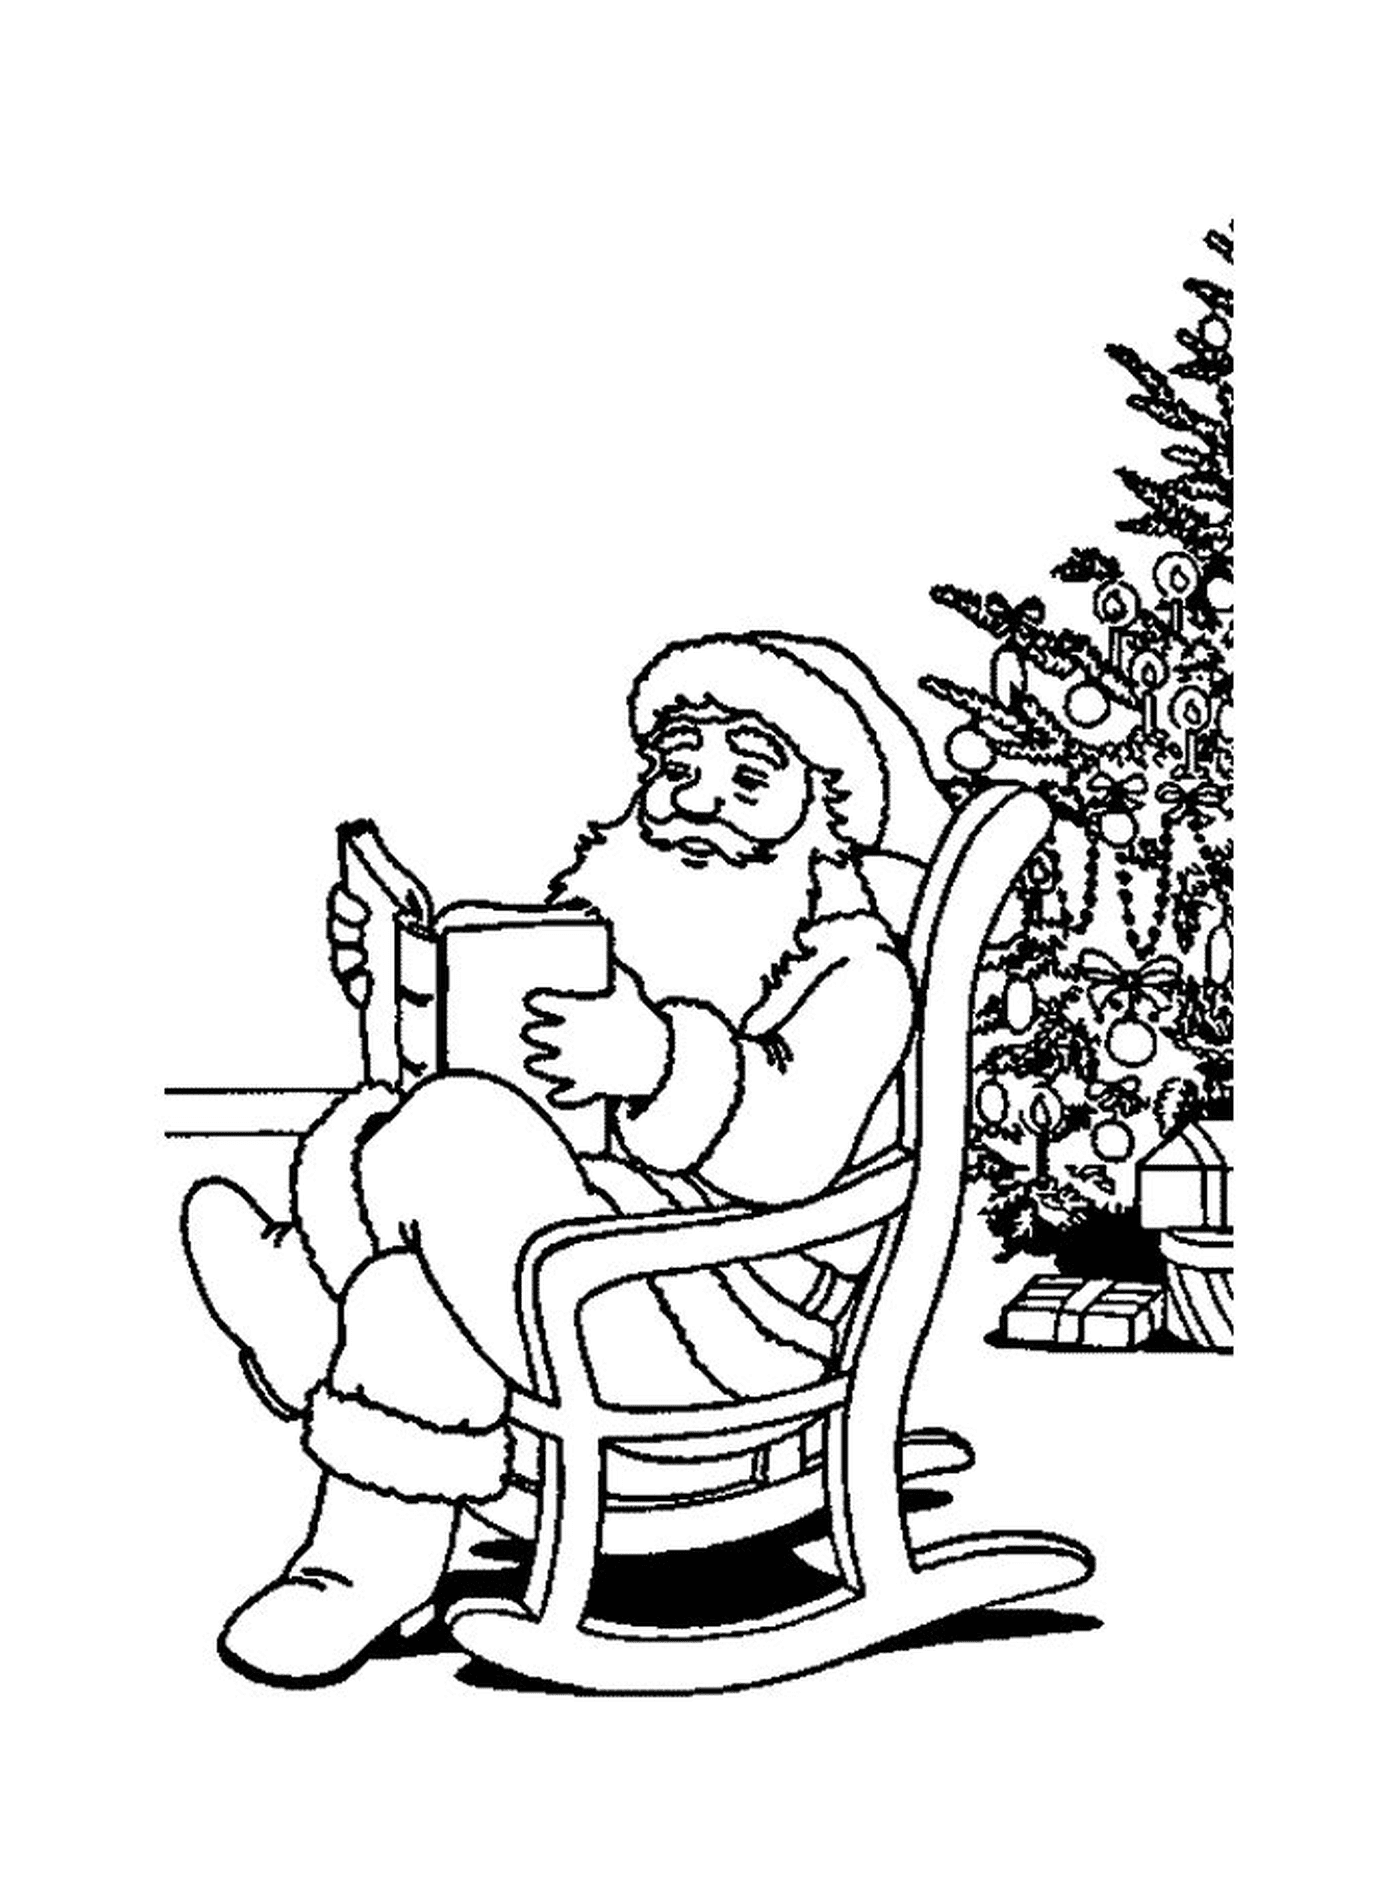  Санта читает книгу у дерева 